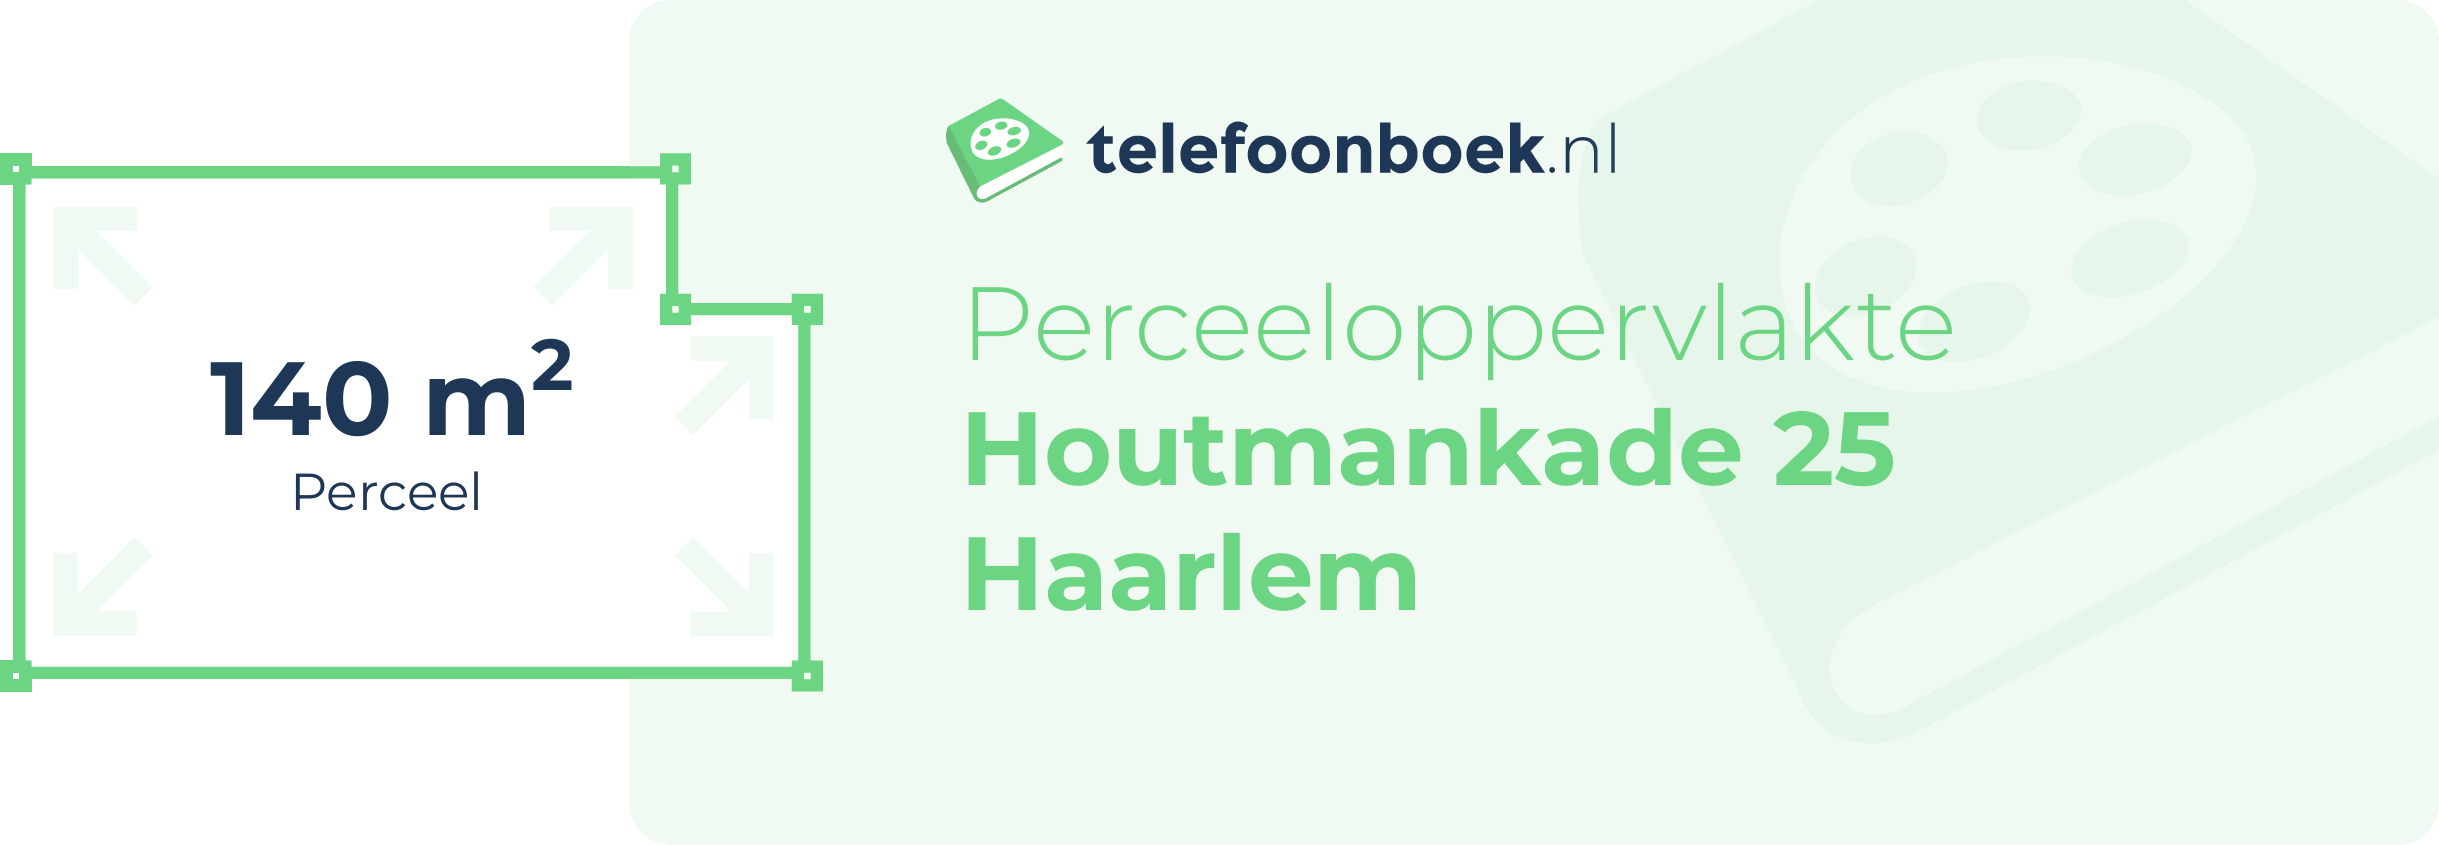 Perceeloppervlakte Houtmankade 25 Haarlem